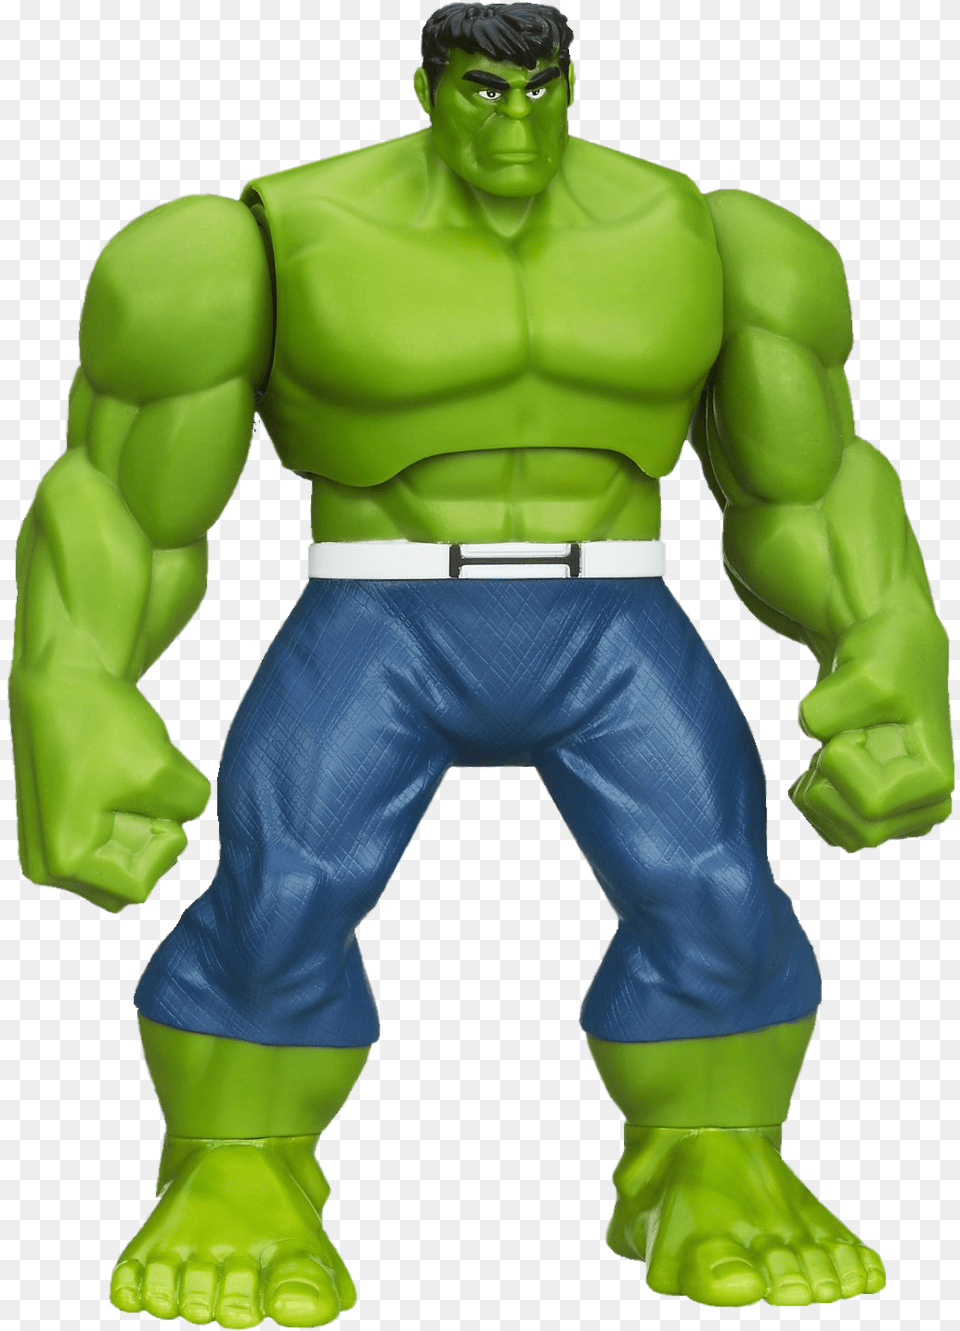 The Hasbro Shake 39n Smash Hulk, Adult, Male, Man, Person Png Image